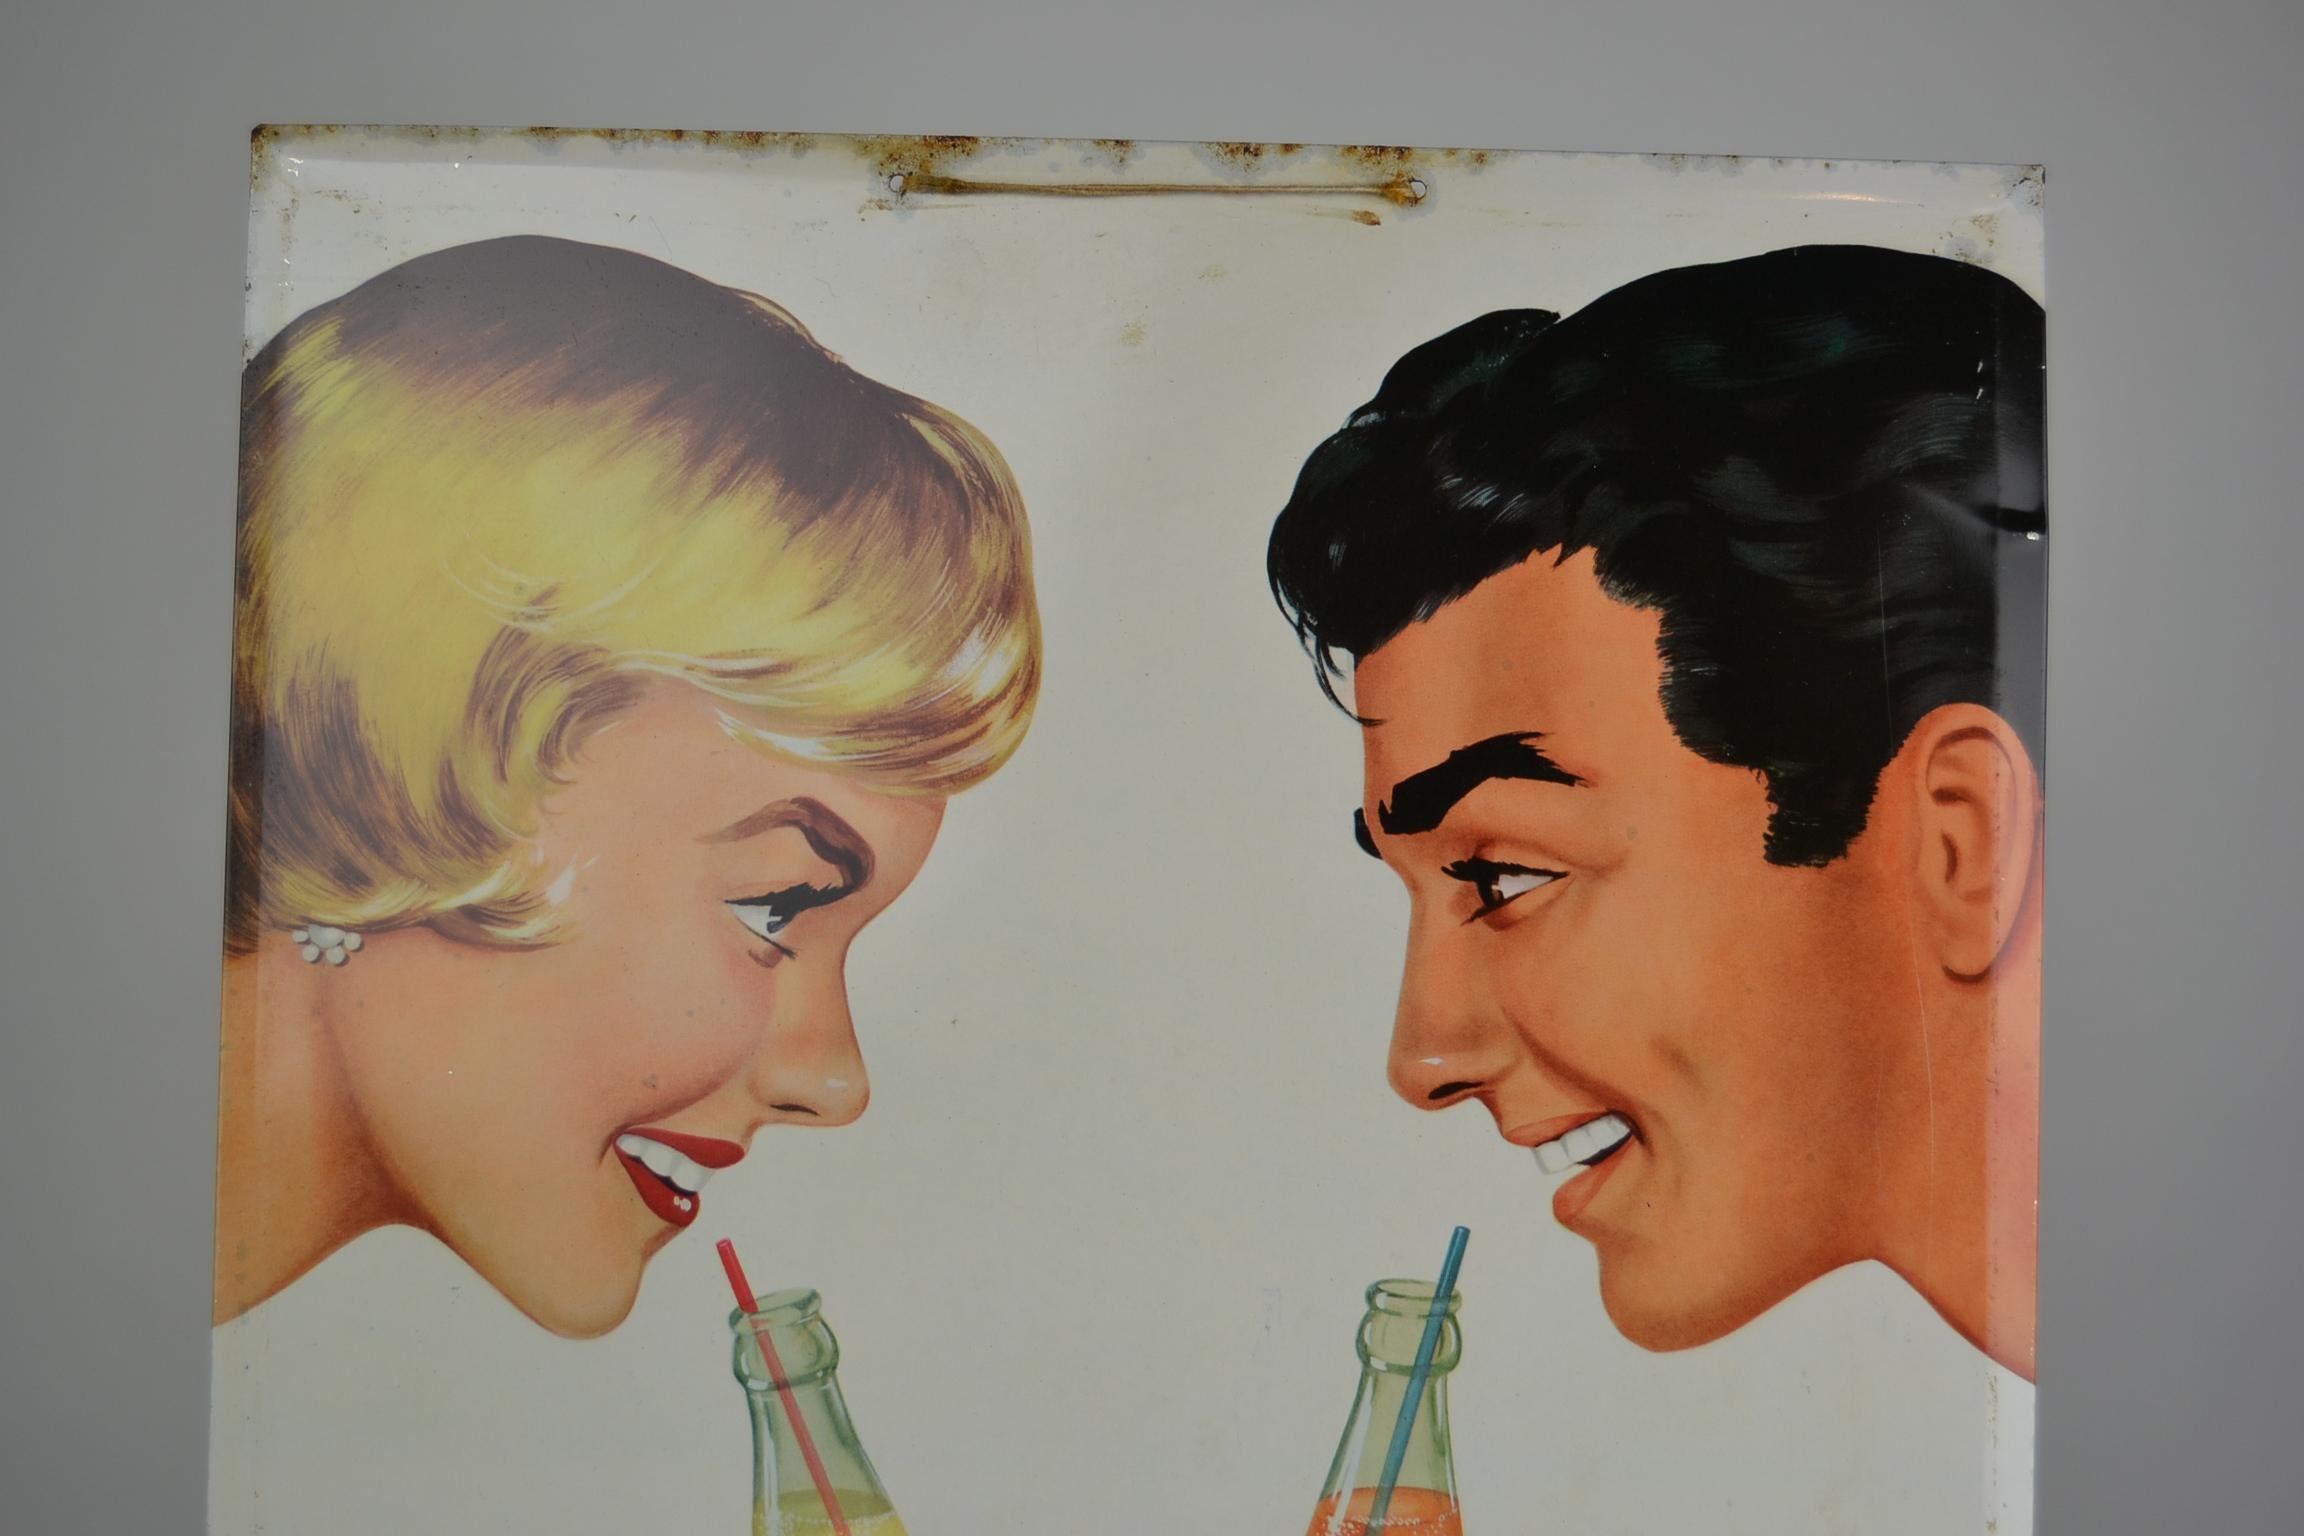 1961 Tin Advertising Sign for Lemonade, Belgium 2